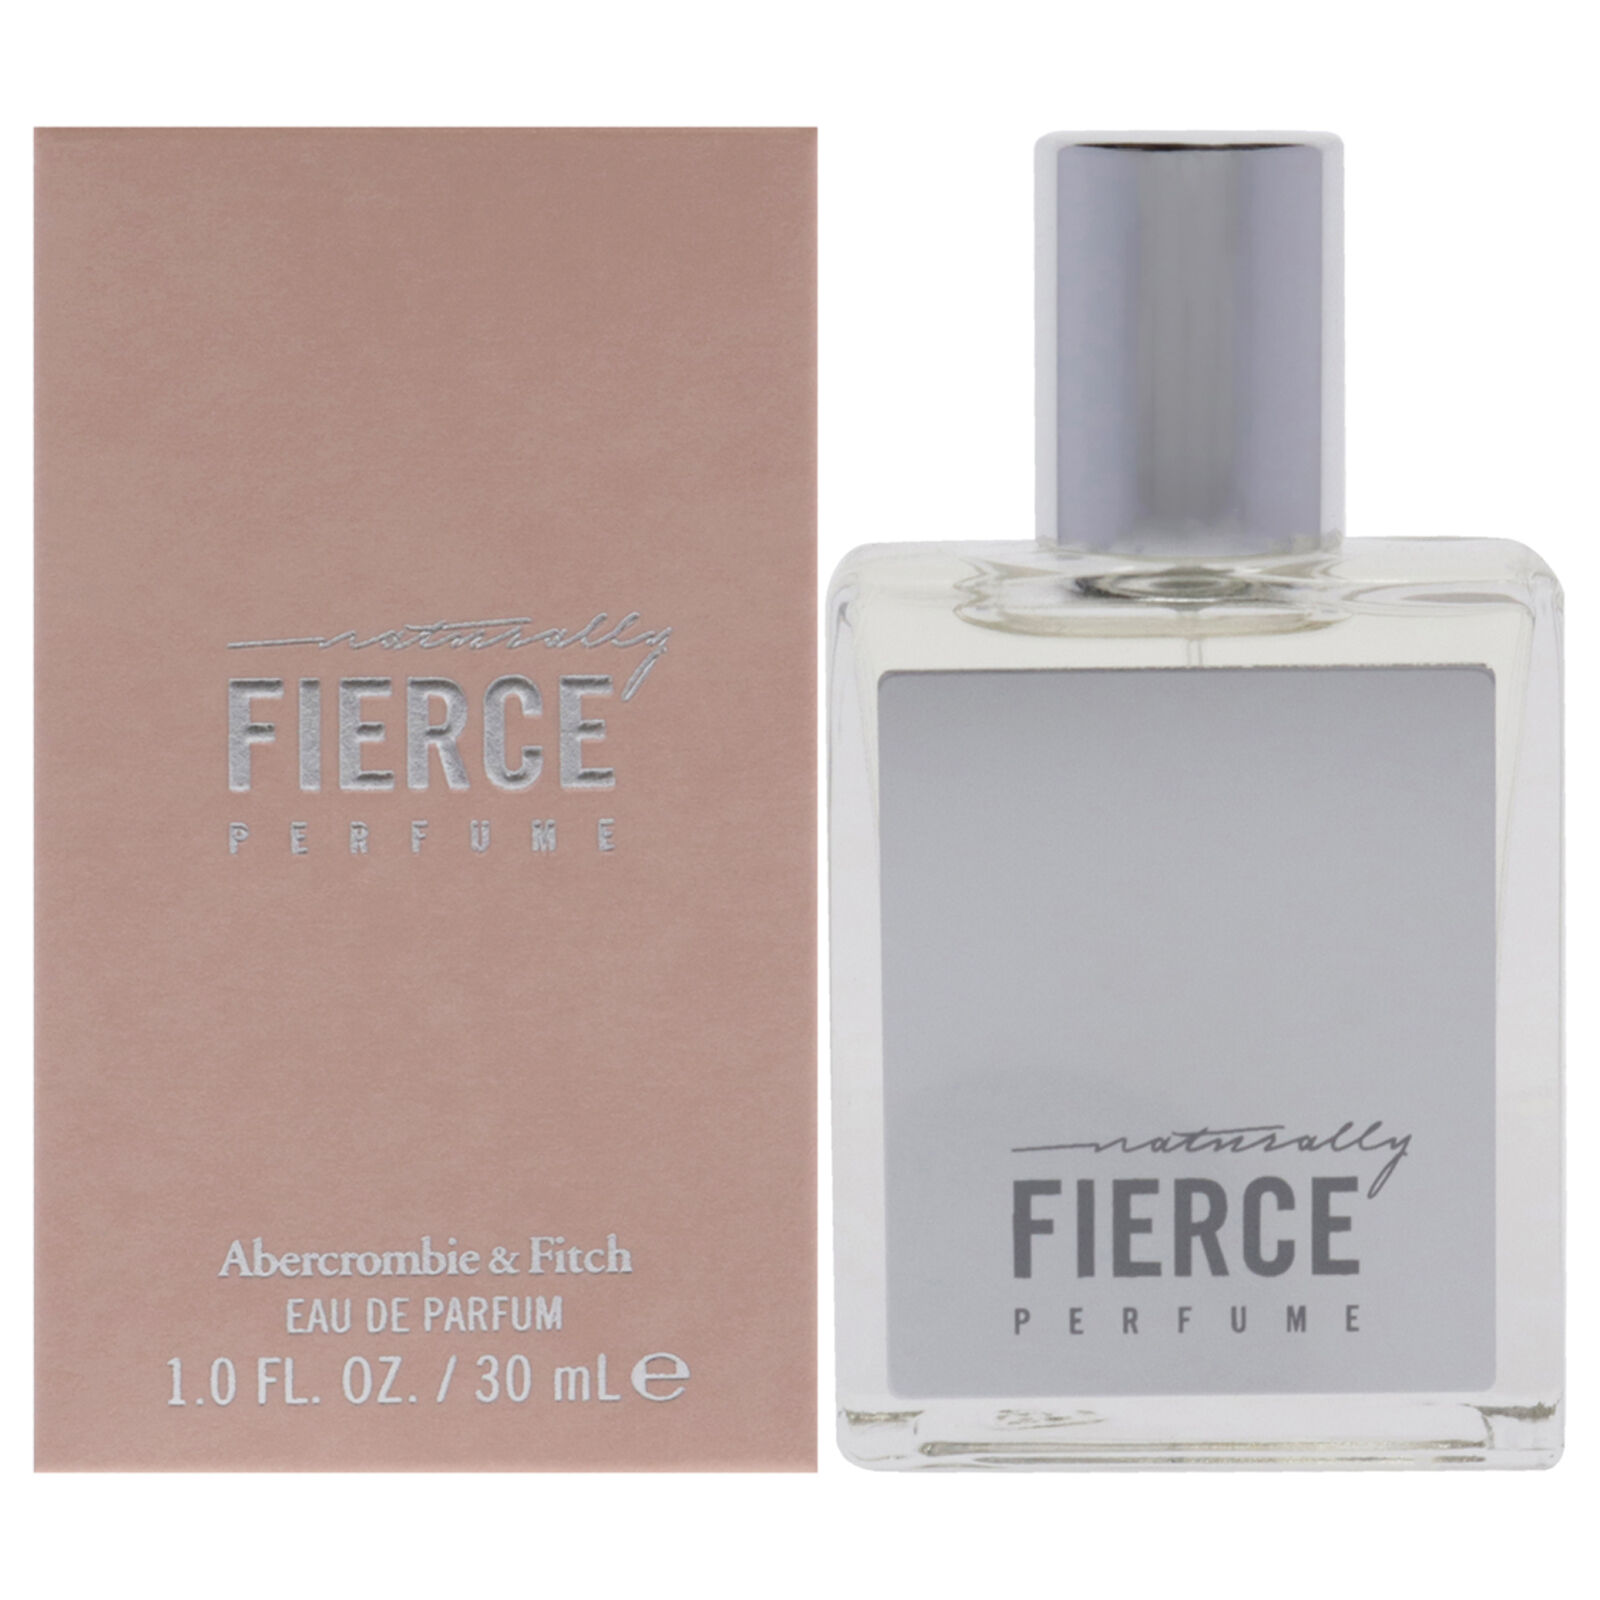 Вода парфюмерная Abercrombie & Fitch Naturally Fierce женская, 30 мл abercrombie